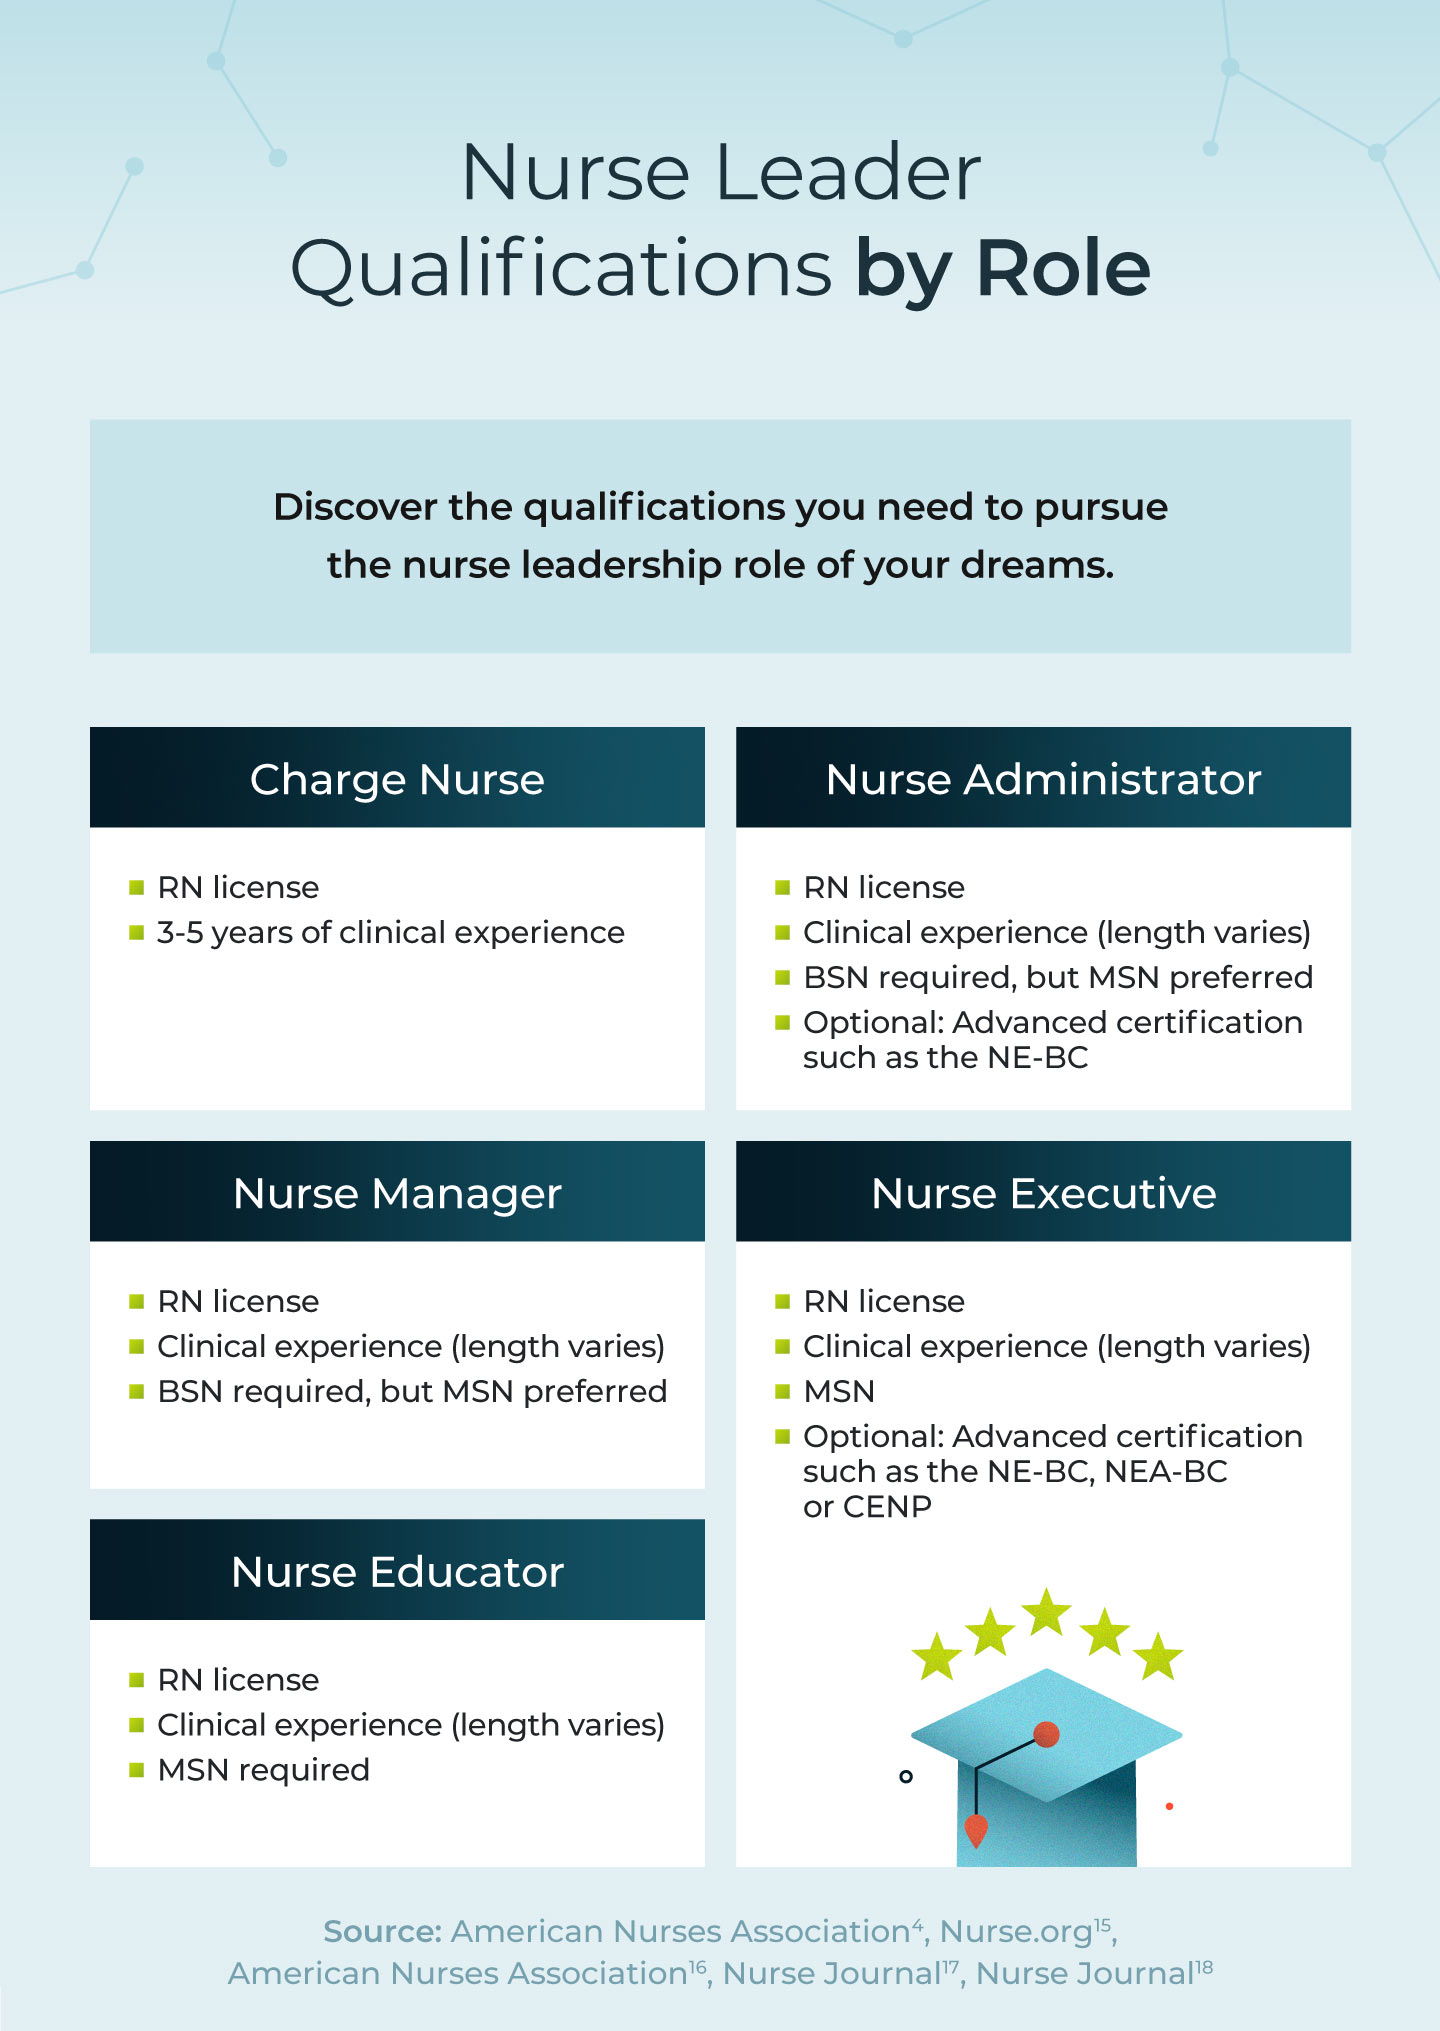 A breakdown of nurse leader qualifications by nursing role.